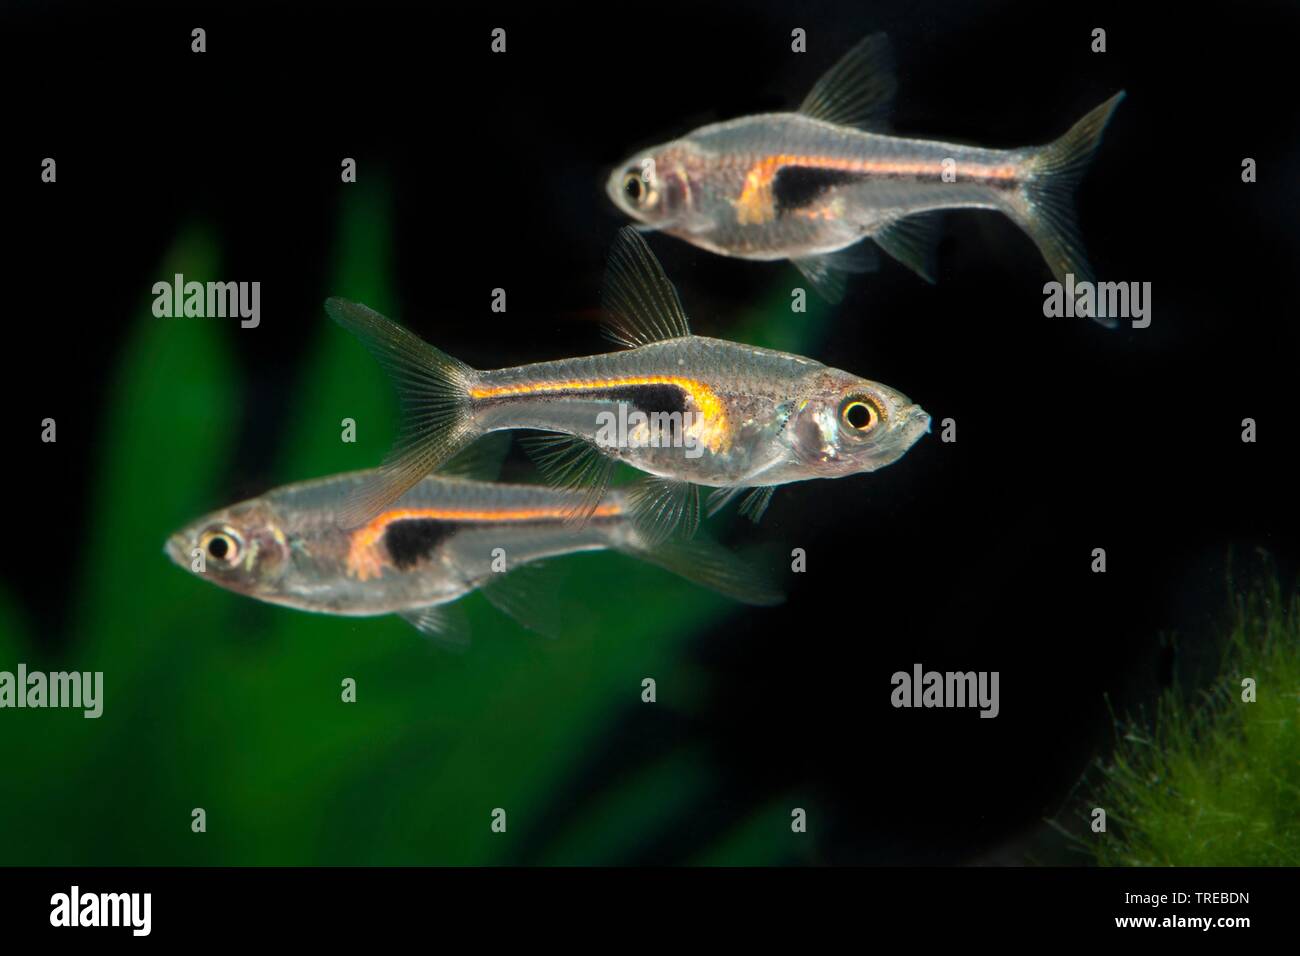 Harlequin Rasbora, Harlequin fish (Trigonostigma heteromorpha, Rasbora heteromorpha), three swimming Harlequin fishes, side view Stock Photo